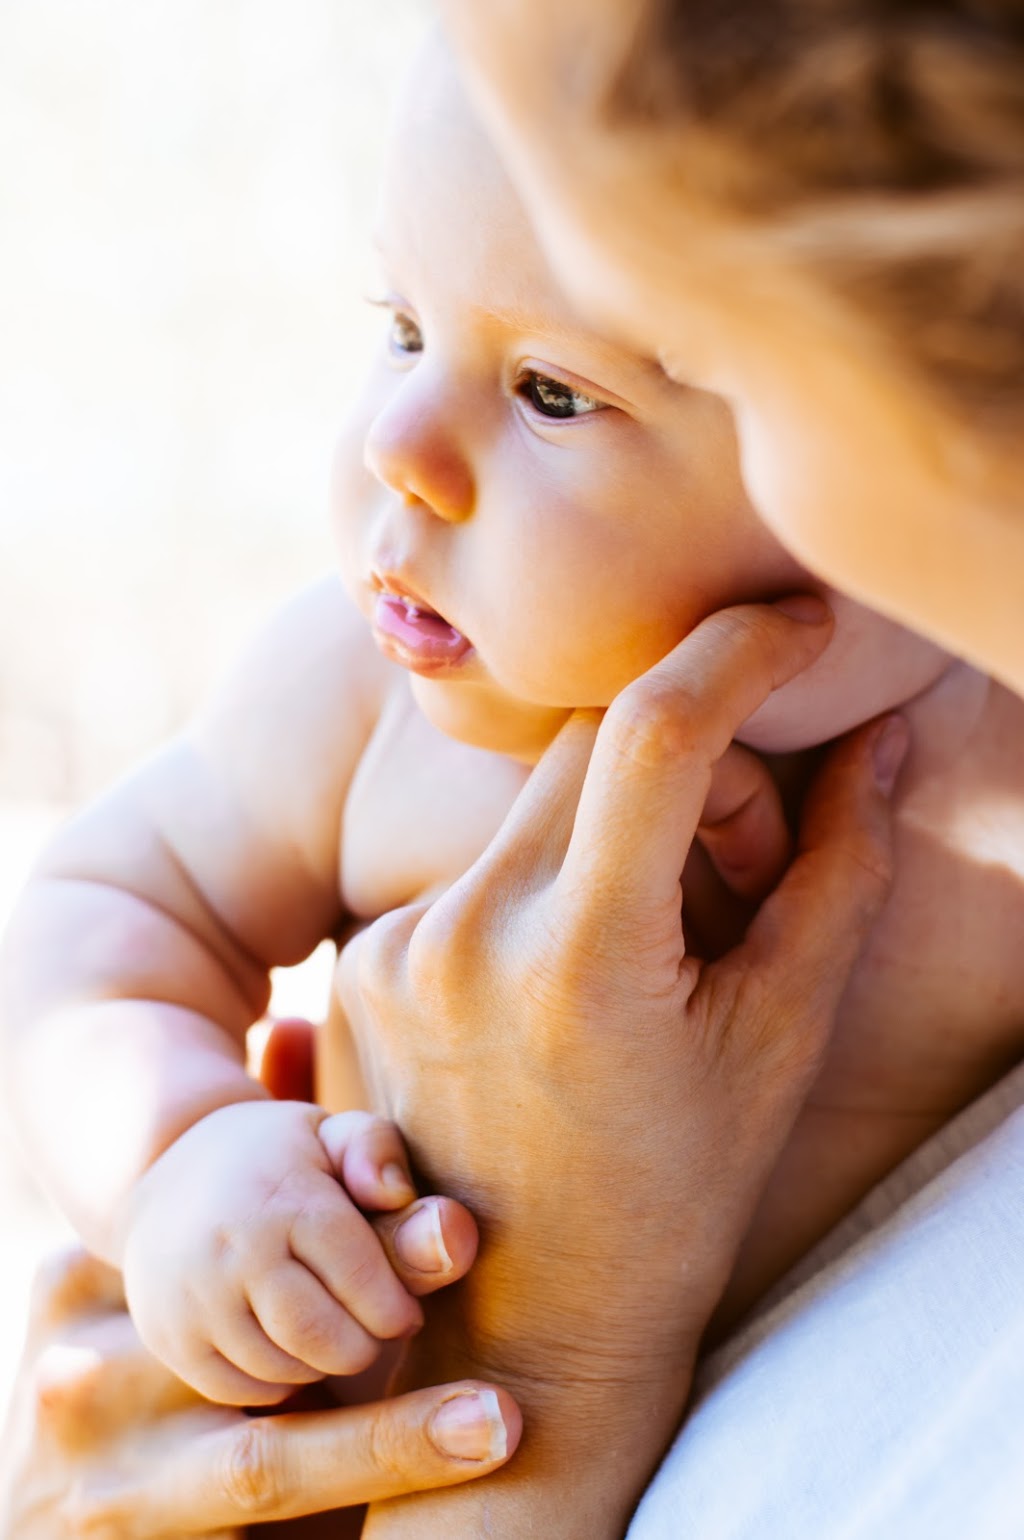 Baby Massage Perth | clothing store | Marmion Ave, Mullaloo WA 6027, Australia | 0404766656 OR +61 404 766 656